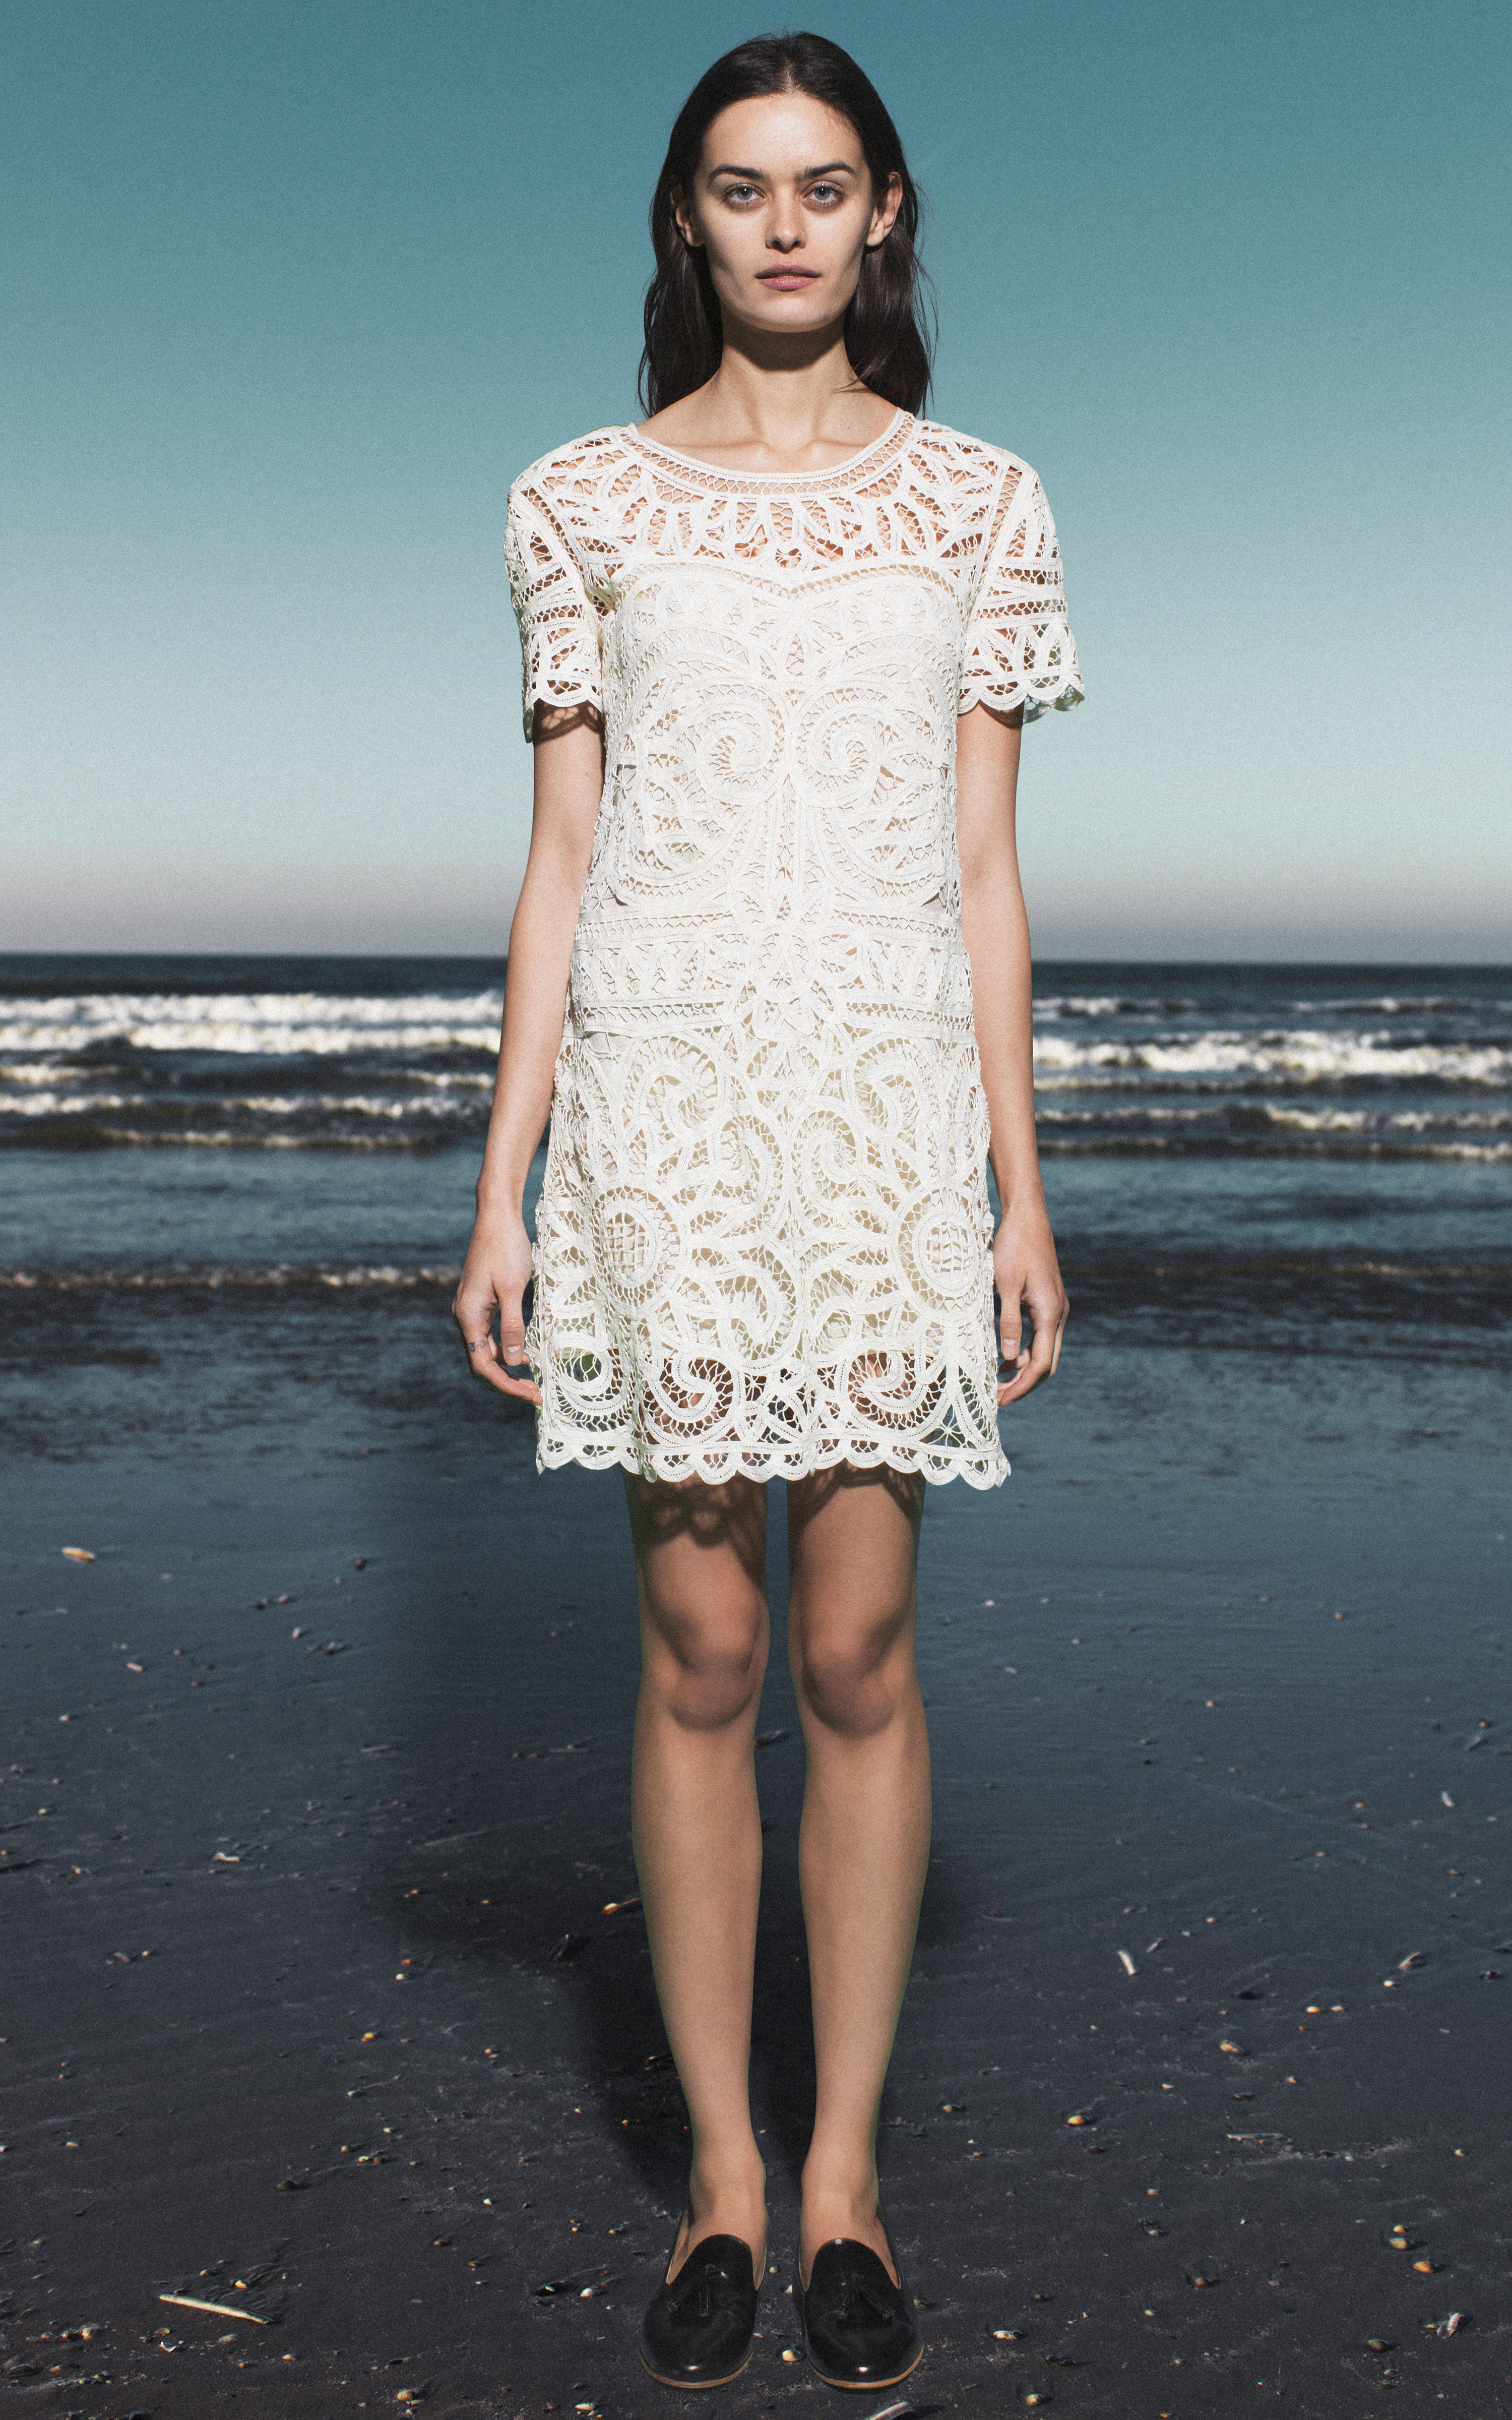 Lyst - Sea Battenburg Lace Short Sleeve Dress in White